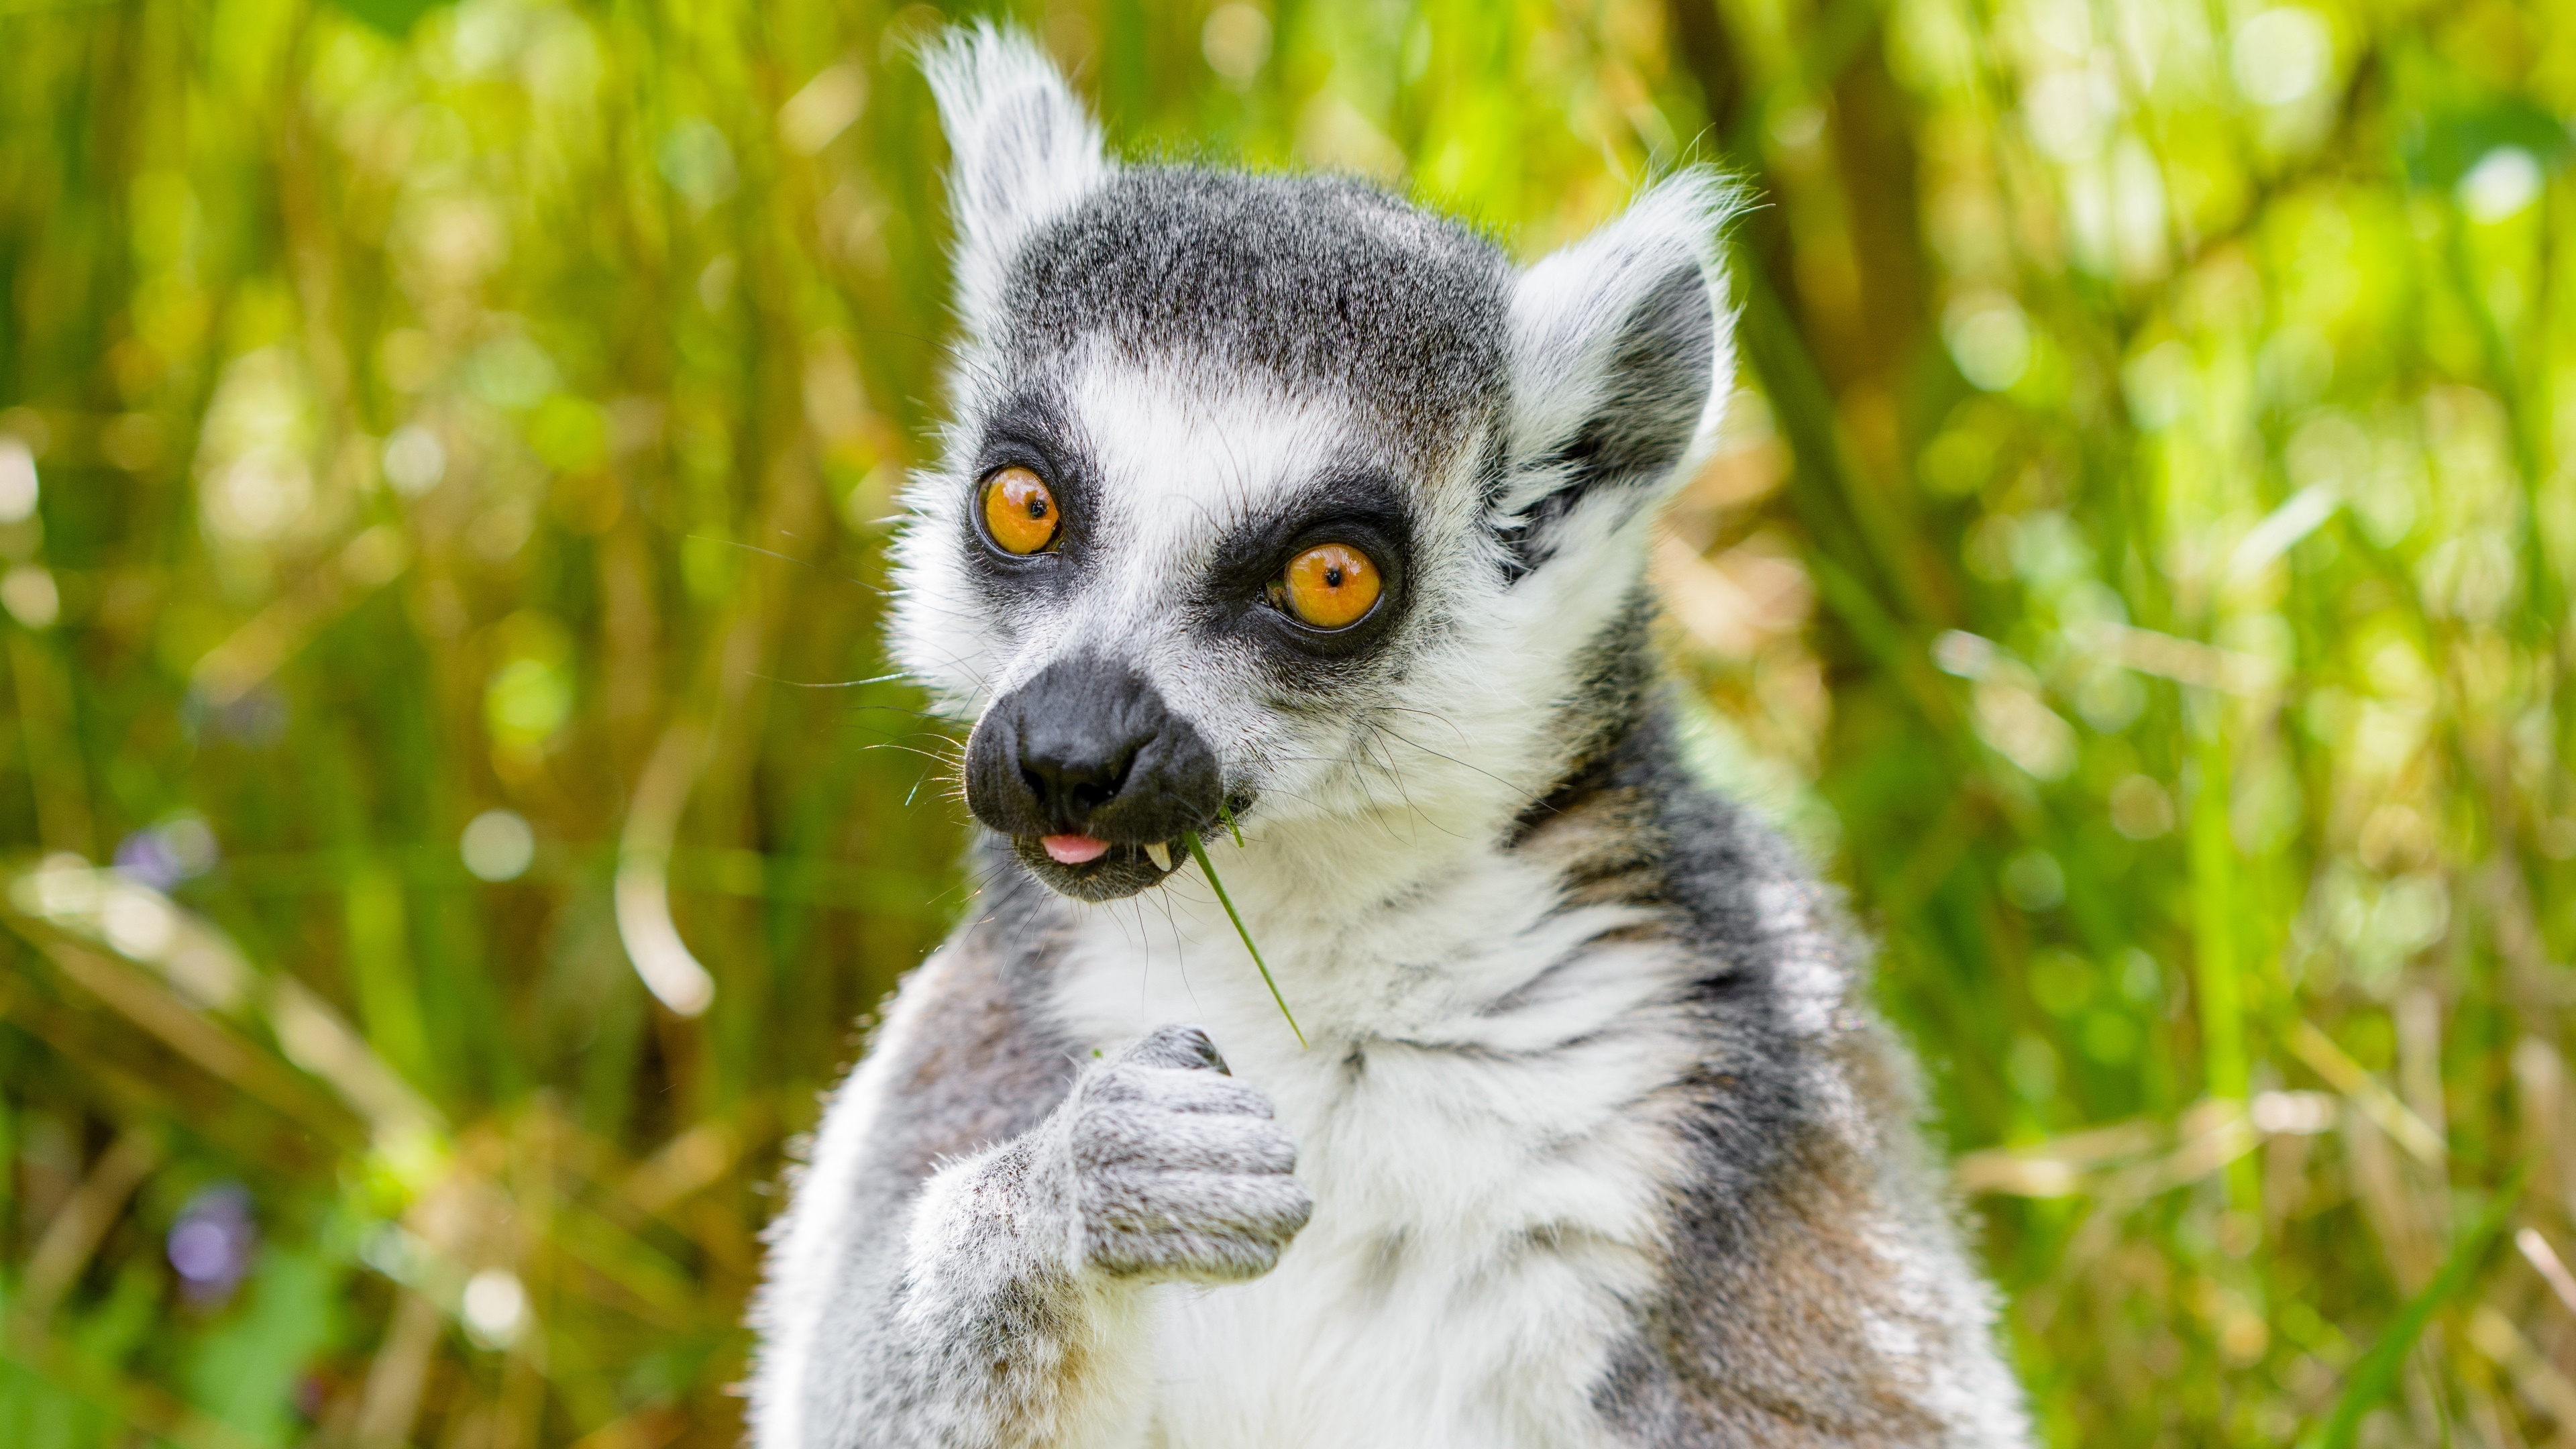 4K lemur wallpapers, Background images, Rainforest exploration, Madagascar wildlife, 3840x2160 4K Desktop